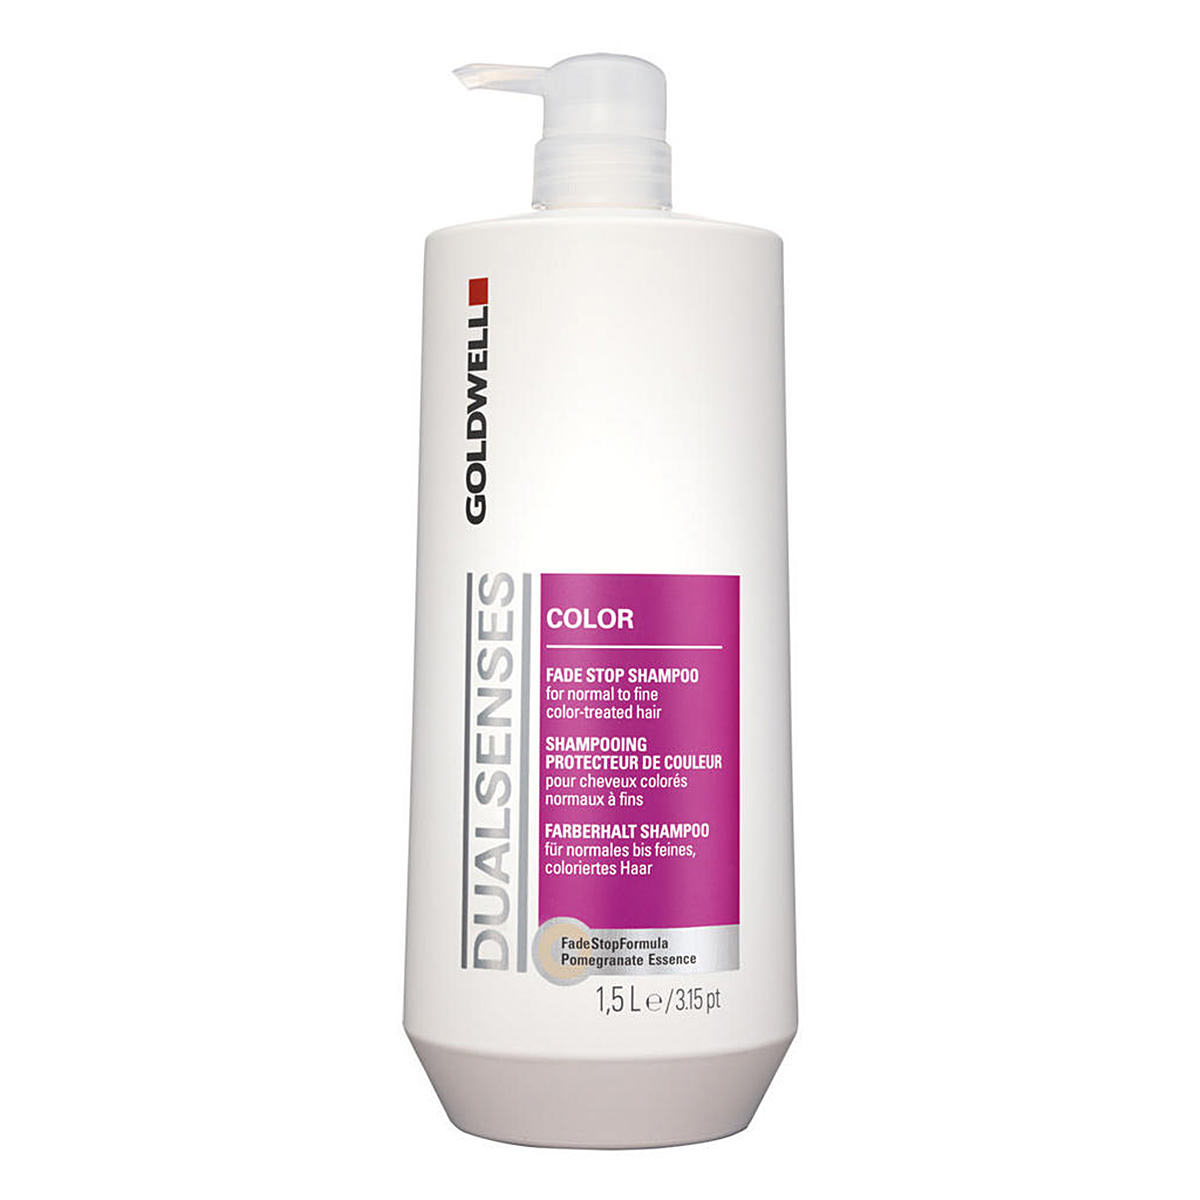 Goldwell-Dual-Sense-Color-Fade-Stop-Shampoo-(1500-ml)-sfw (1)